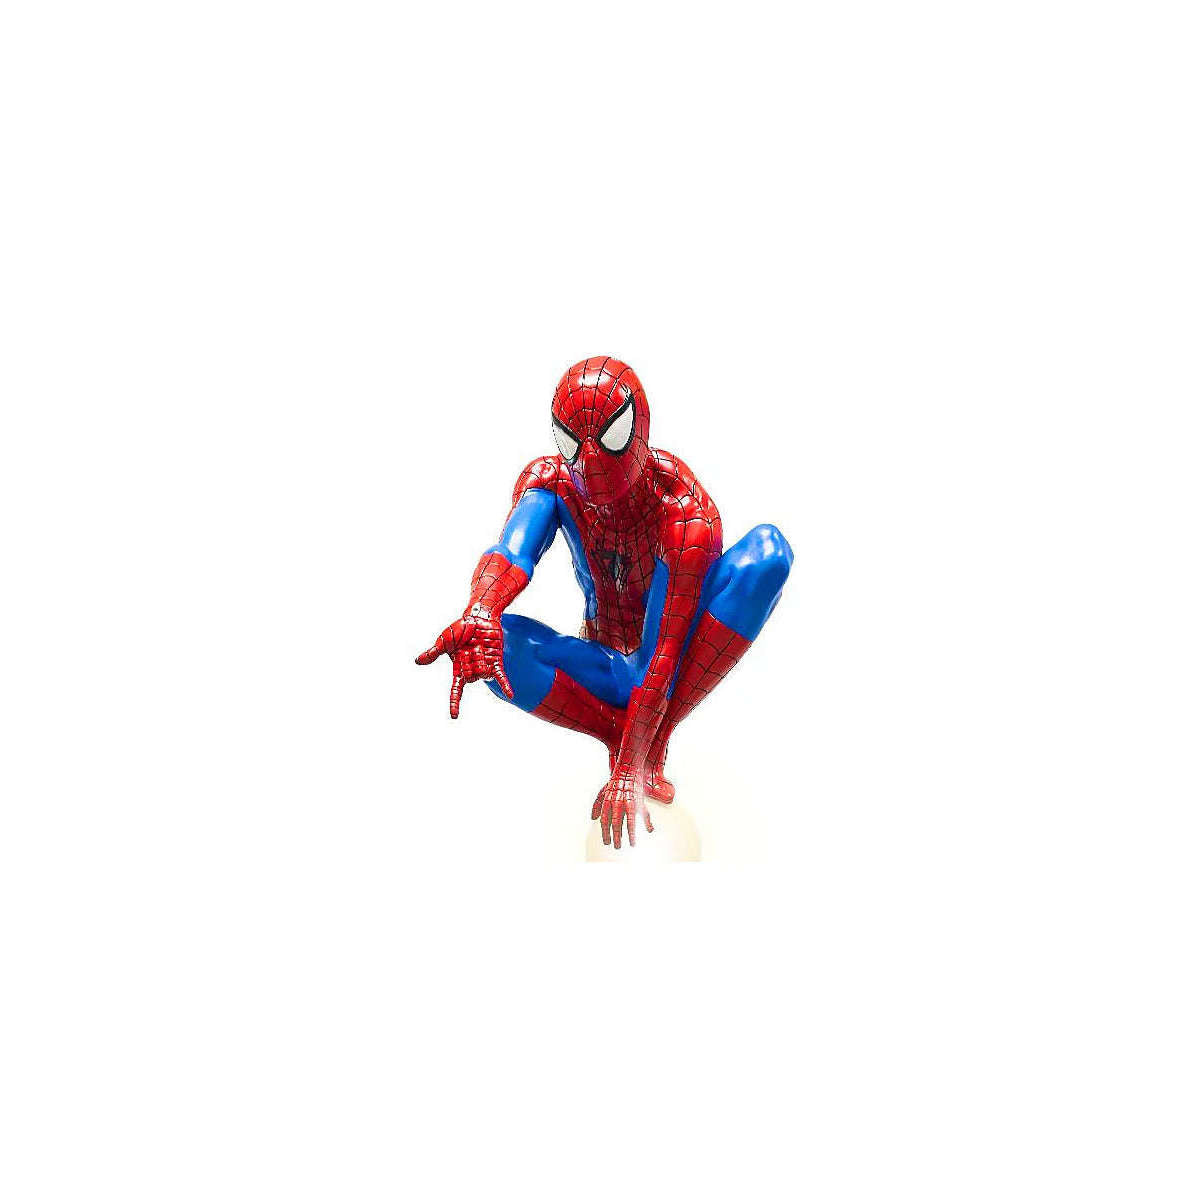 1:1 Scale Spider Man Statue